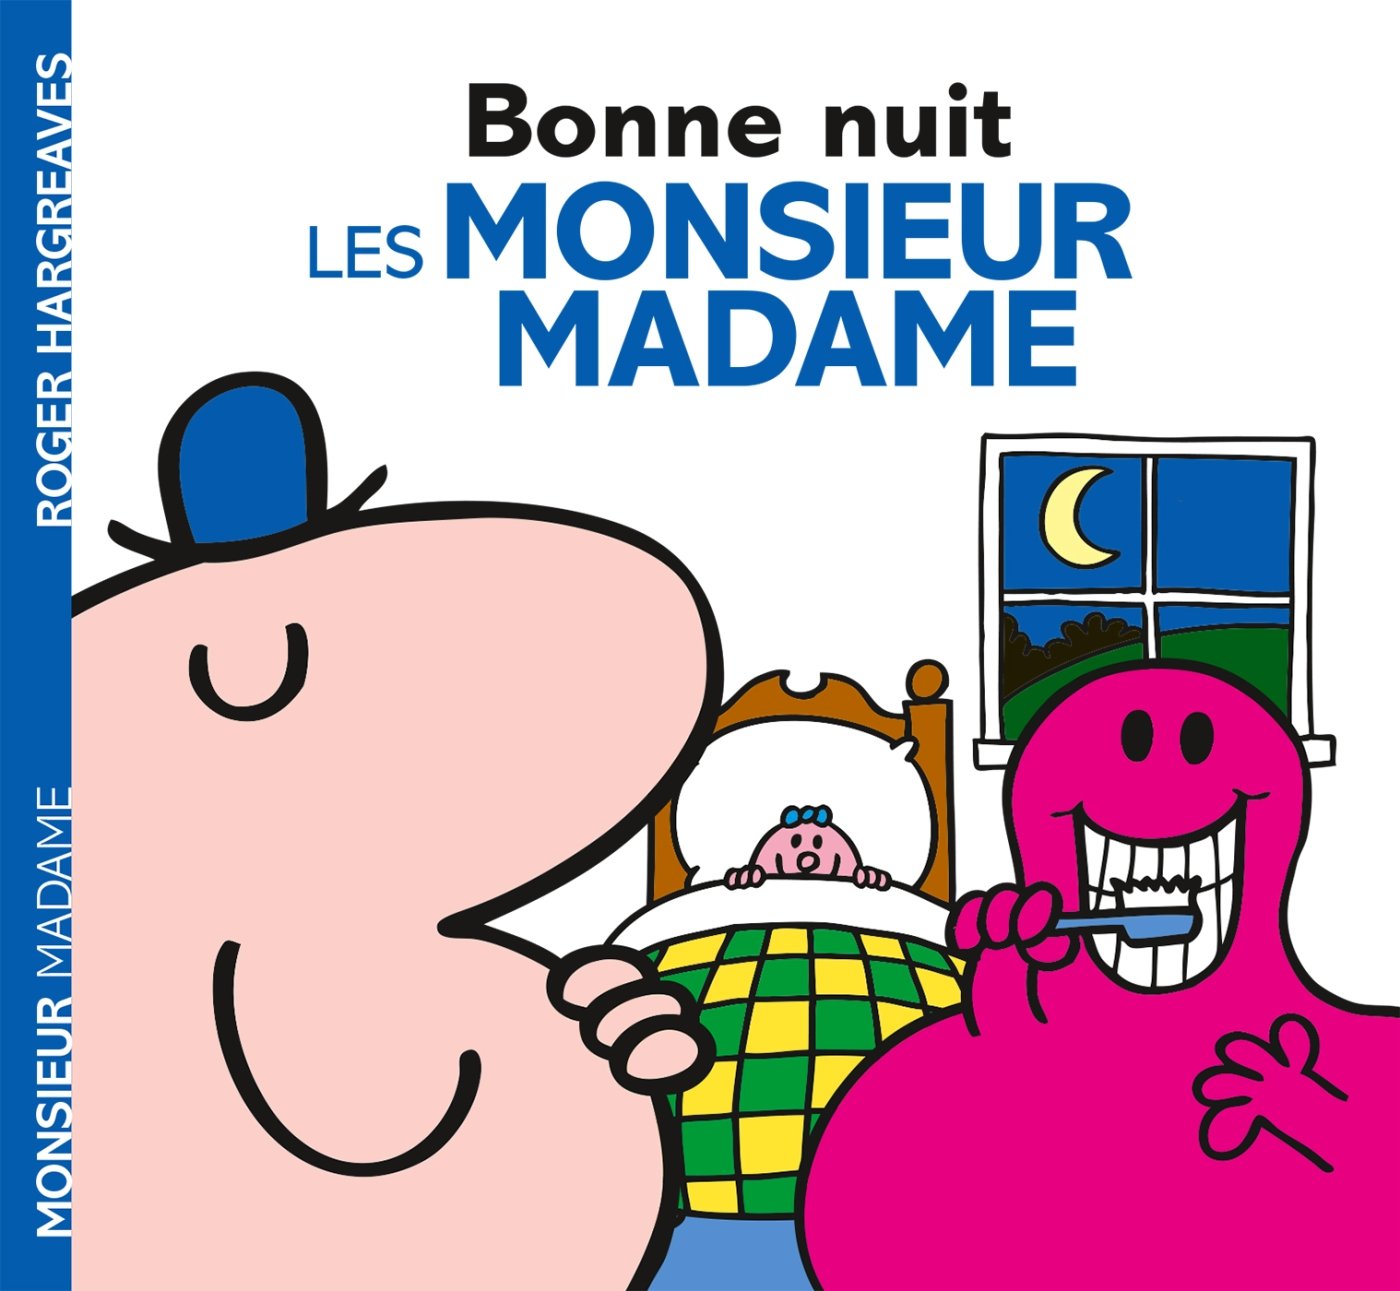 MONSIEUR MADAME - BONNE NUIT, LES MONSIEUR MADAME !